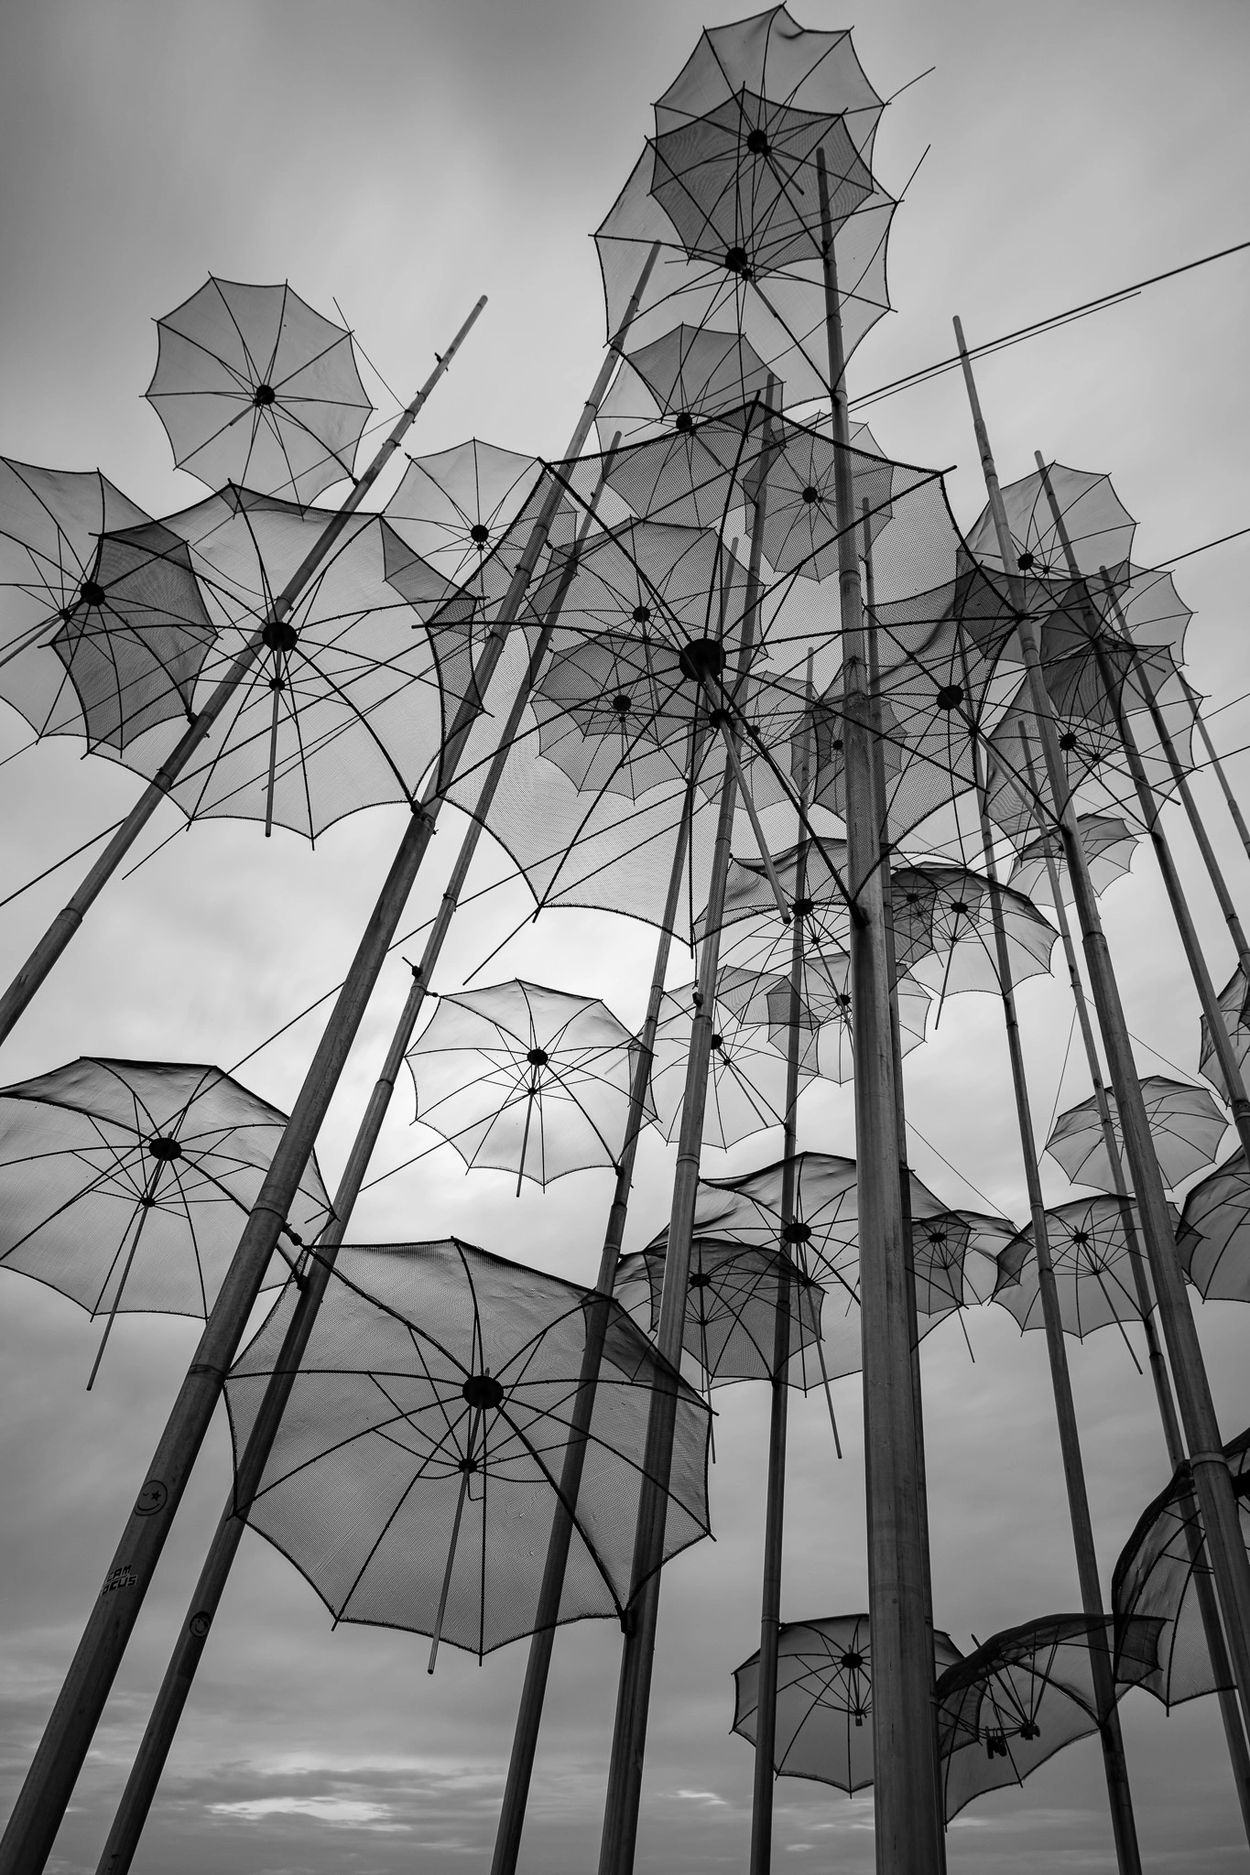 Umbrella sculpture, Thessaloniki, Greece.